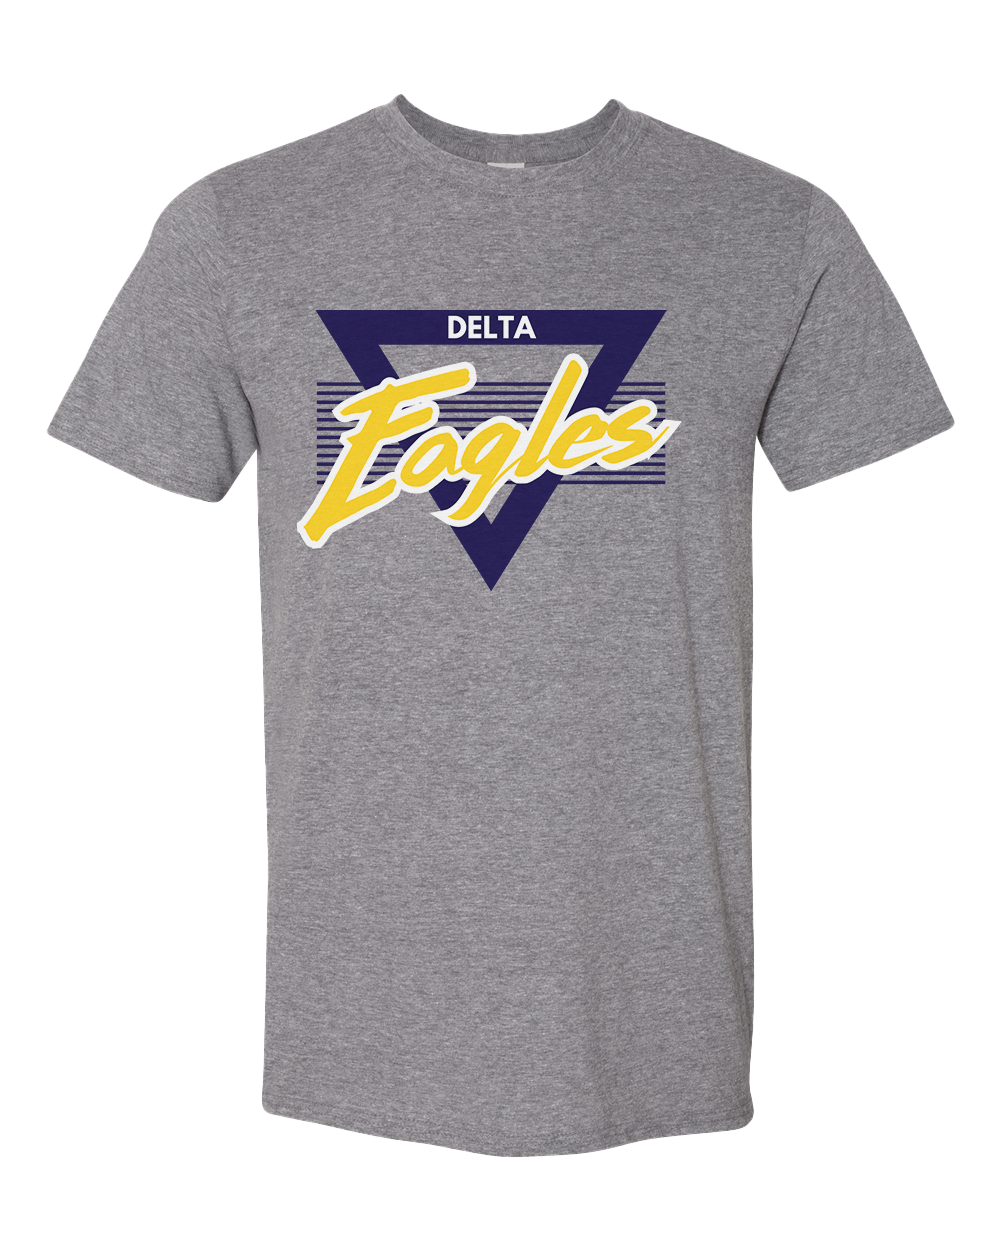 Delta Eagles Vintage 90s Tshirt - Graphite Heather